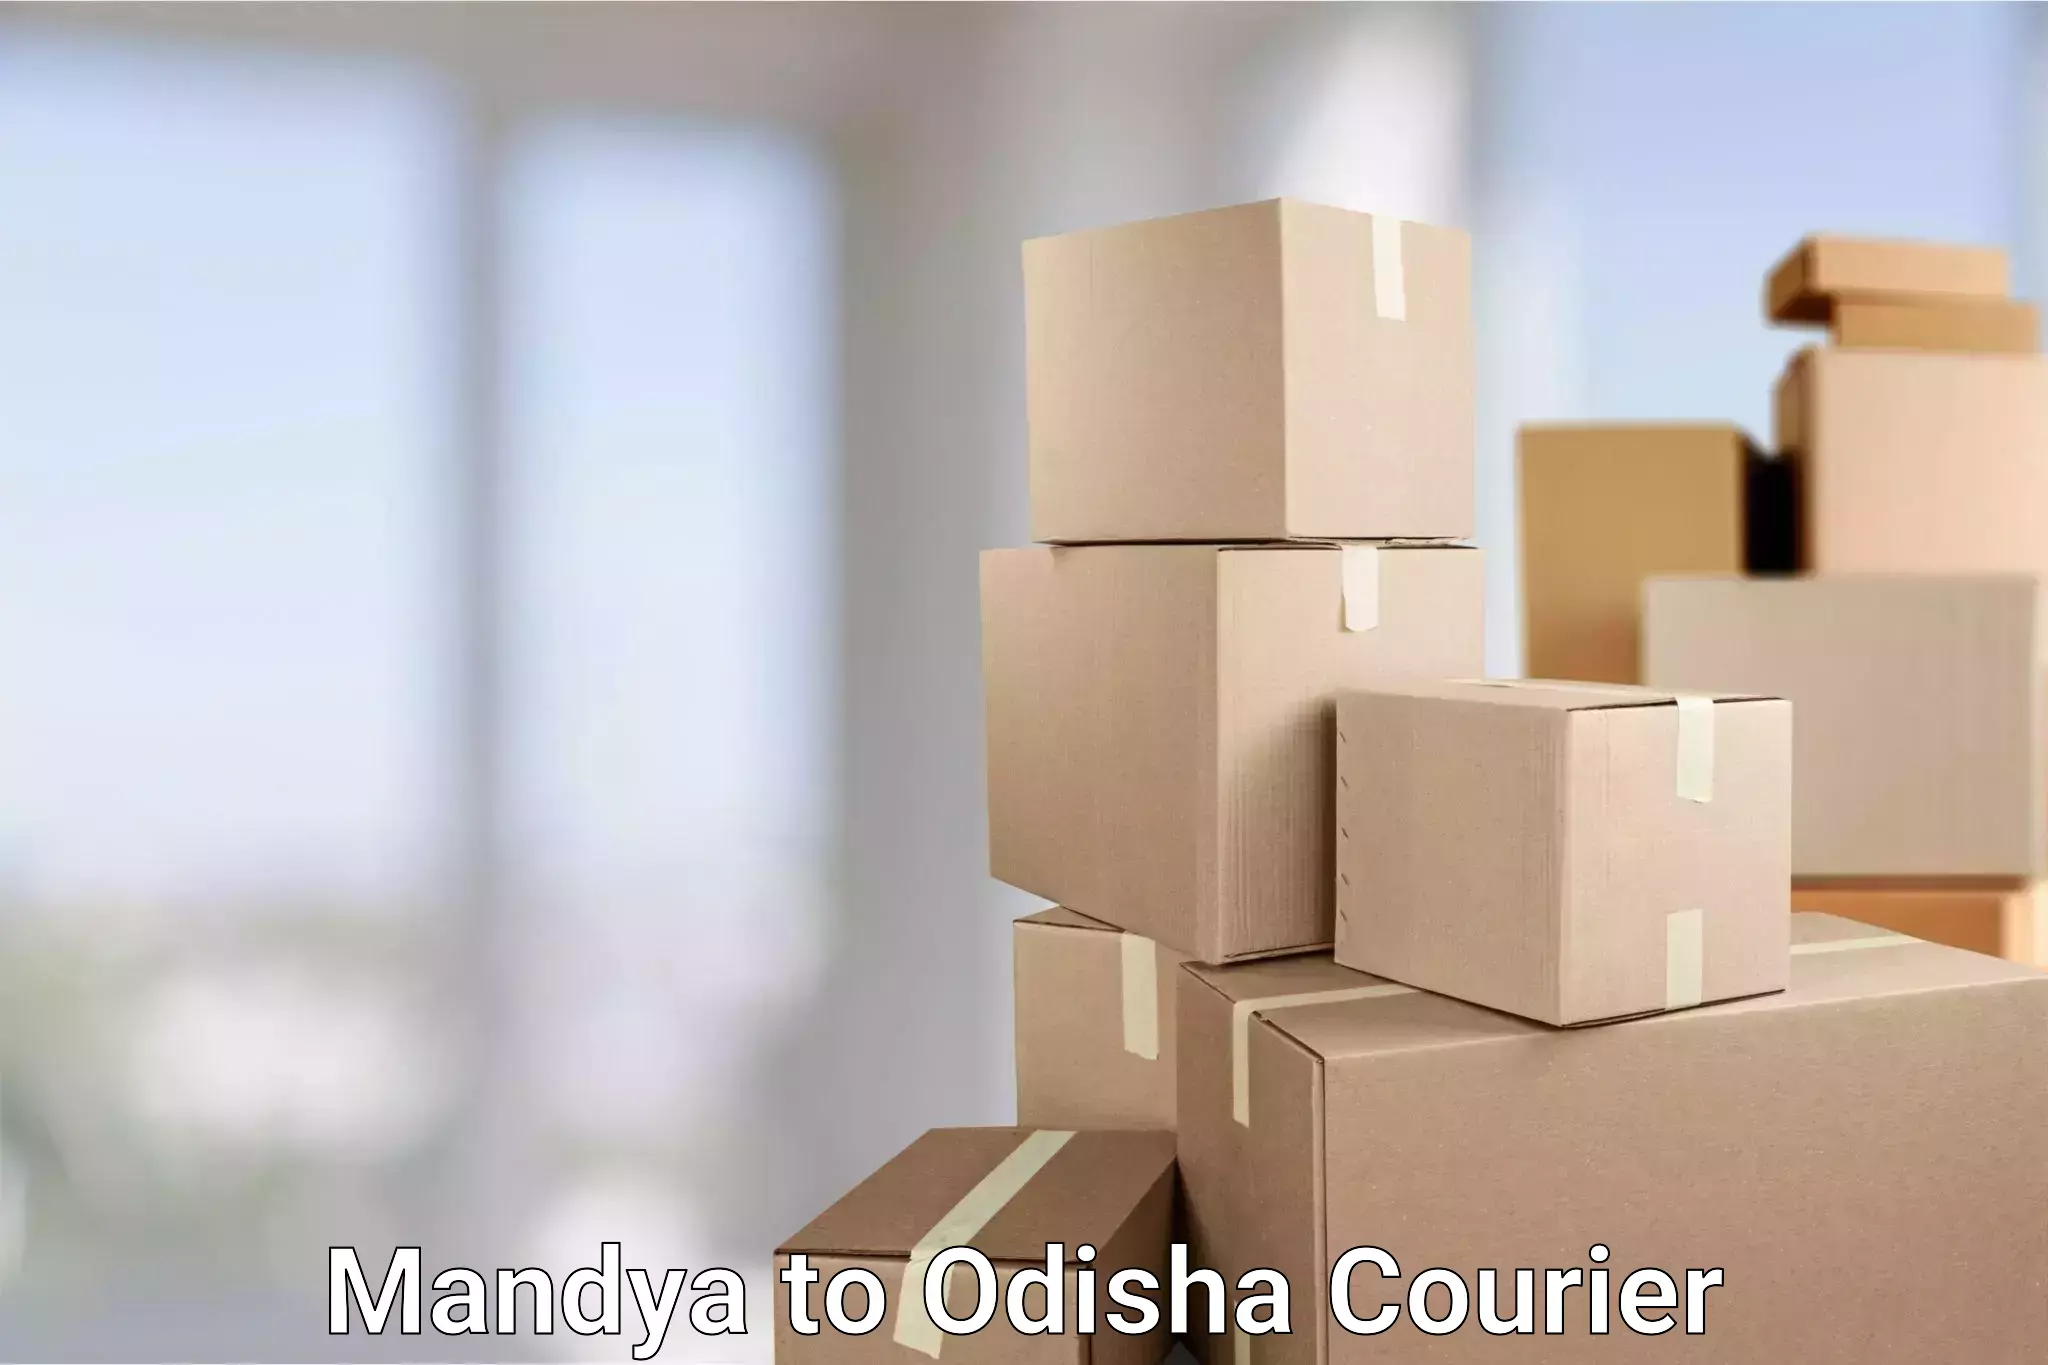 Efficient order fulfillment in Mandya to Odisha